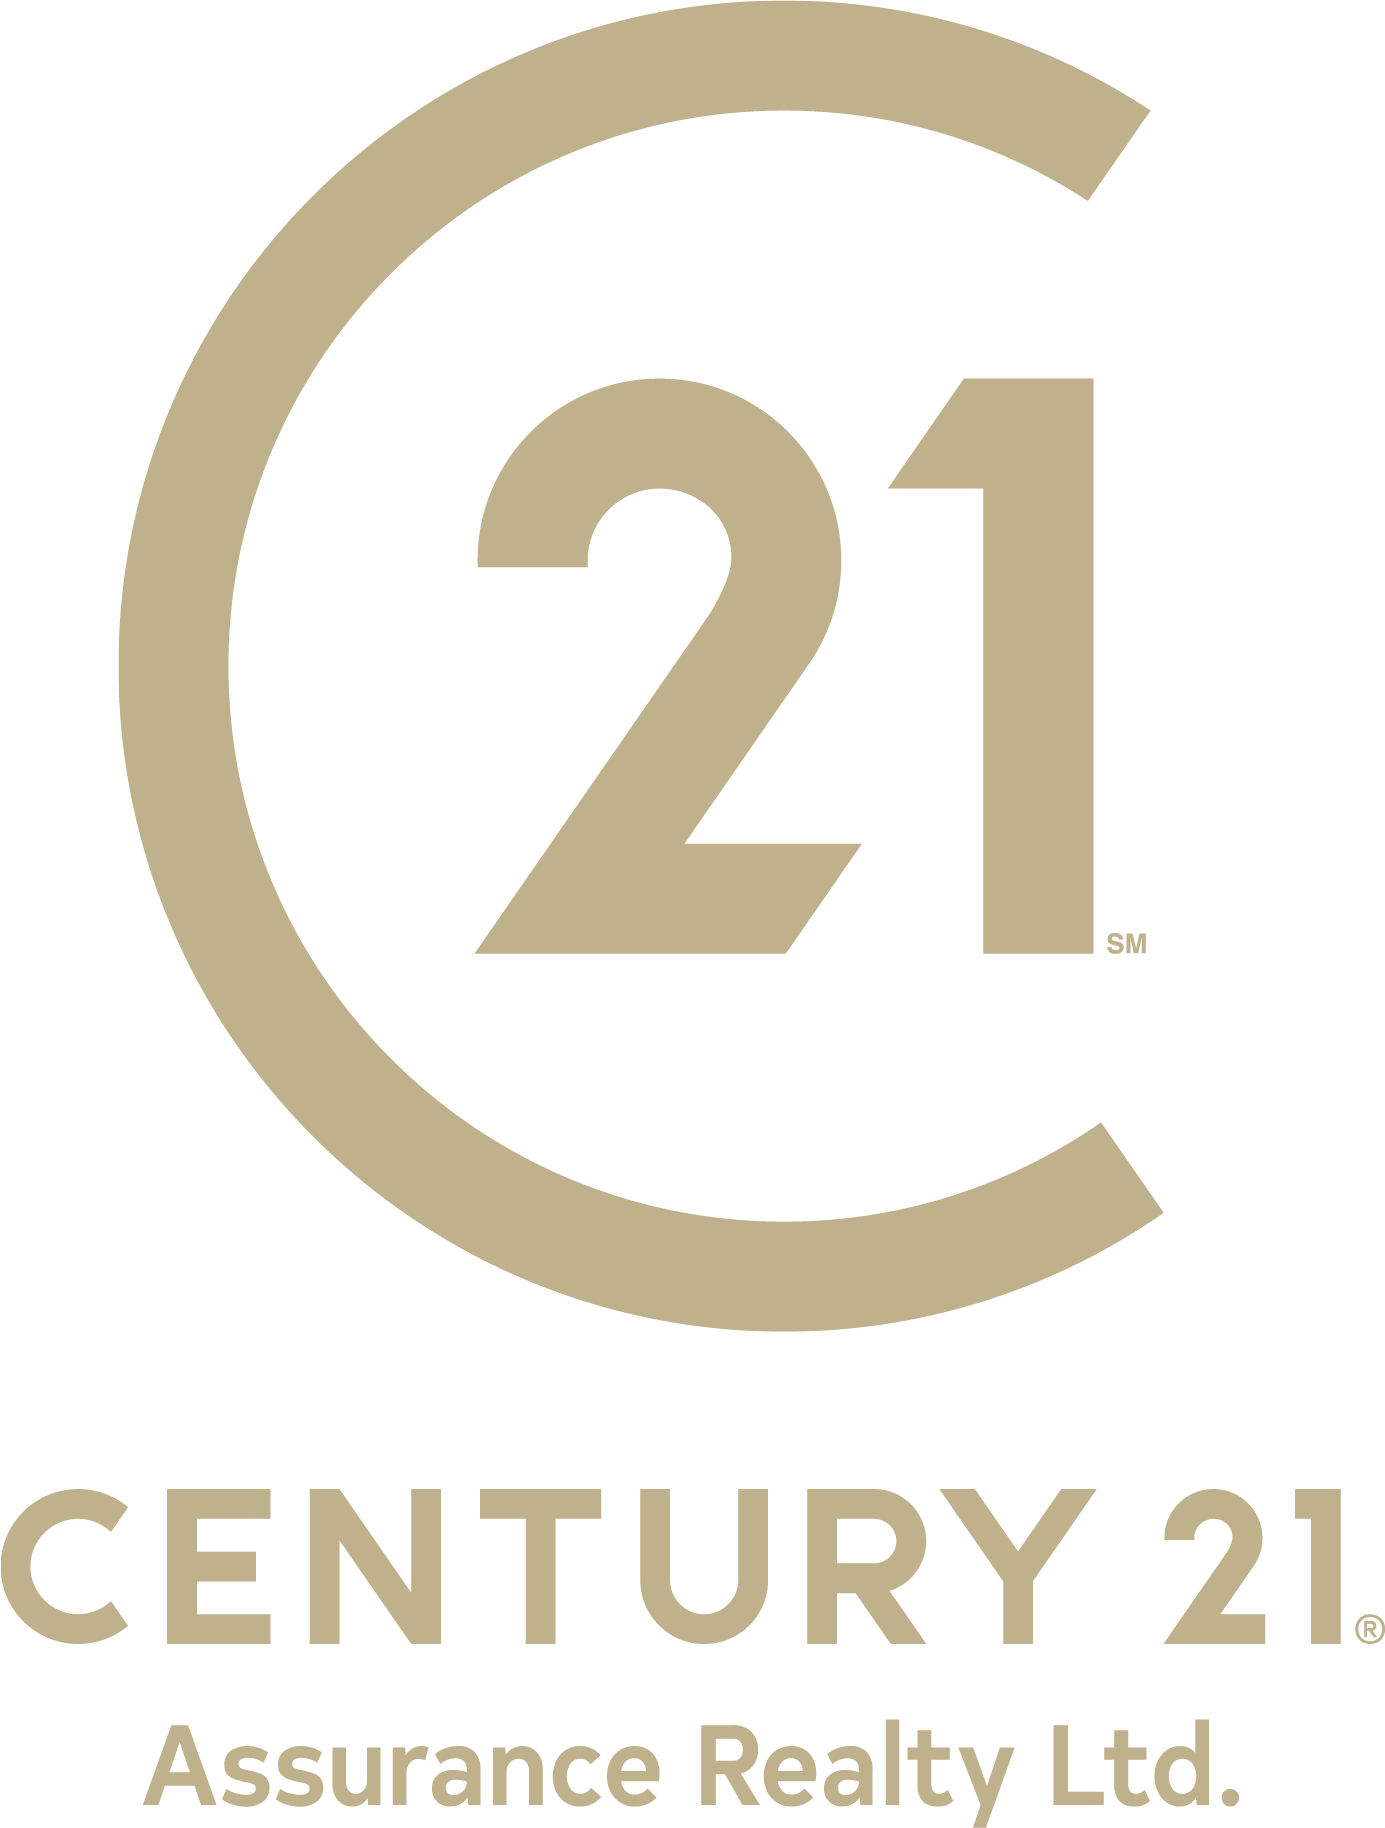 Century 21 Assurance Realty Ltd.